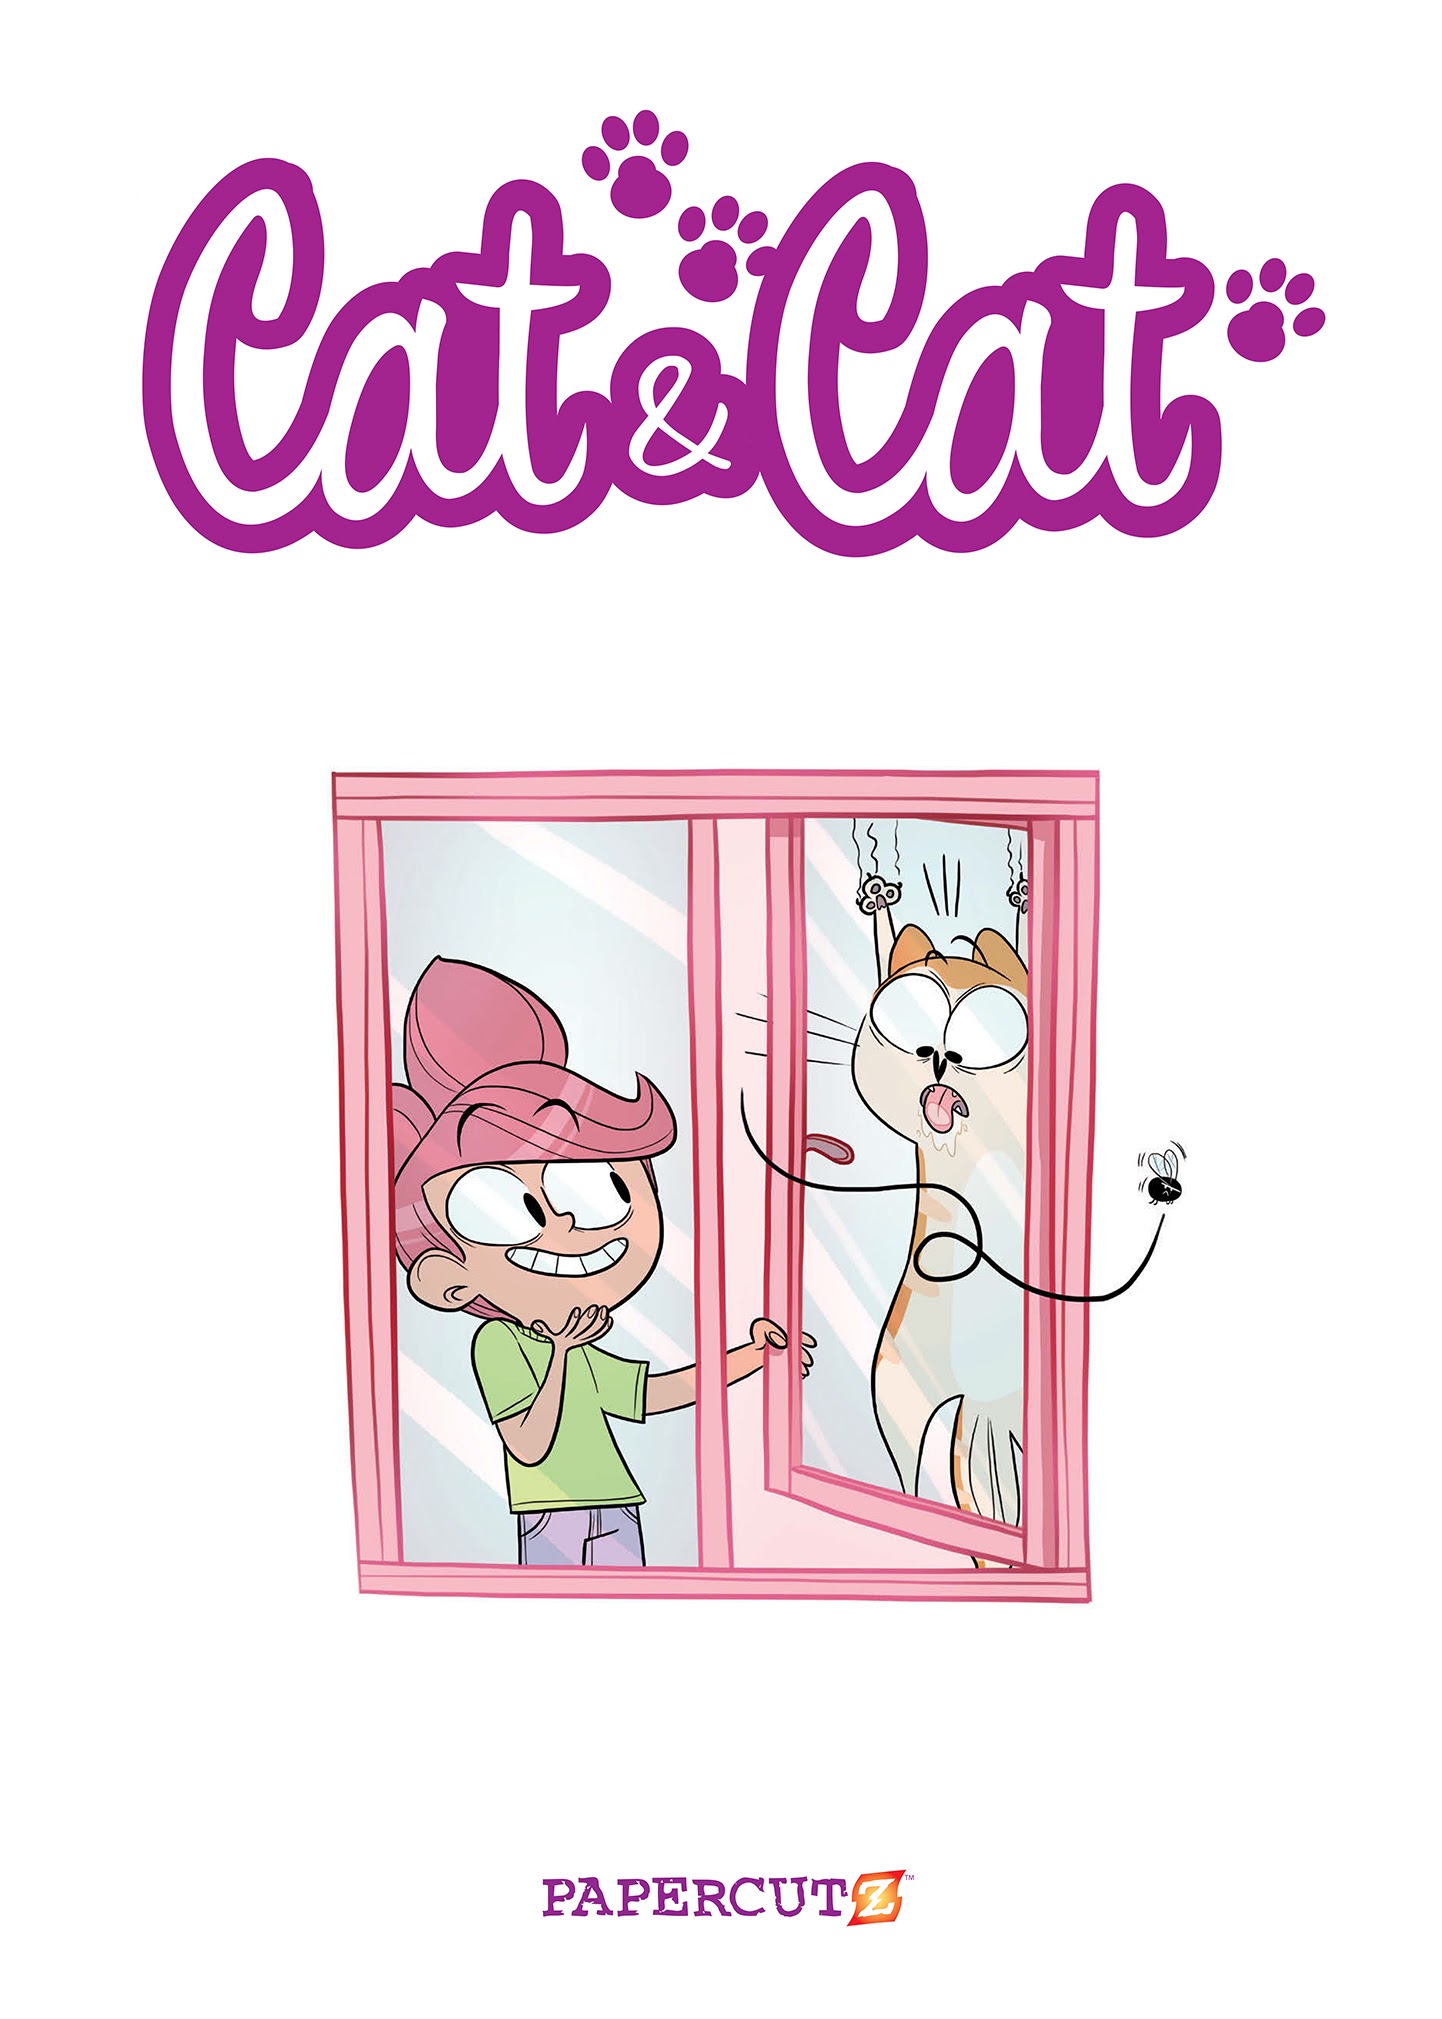 Read online Cat & Cat comic -  Issue # TPB 1 - 3